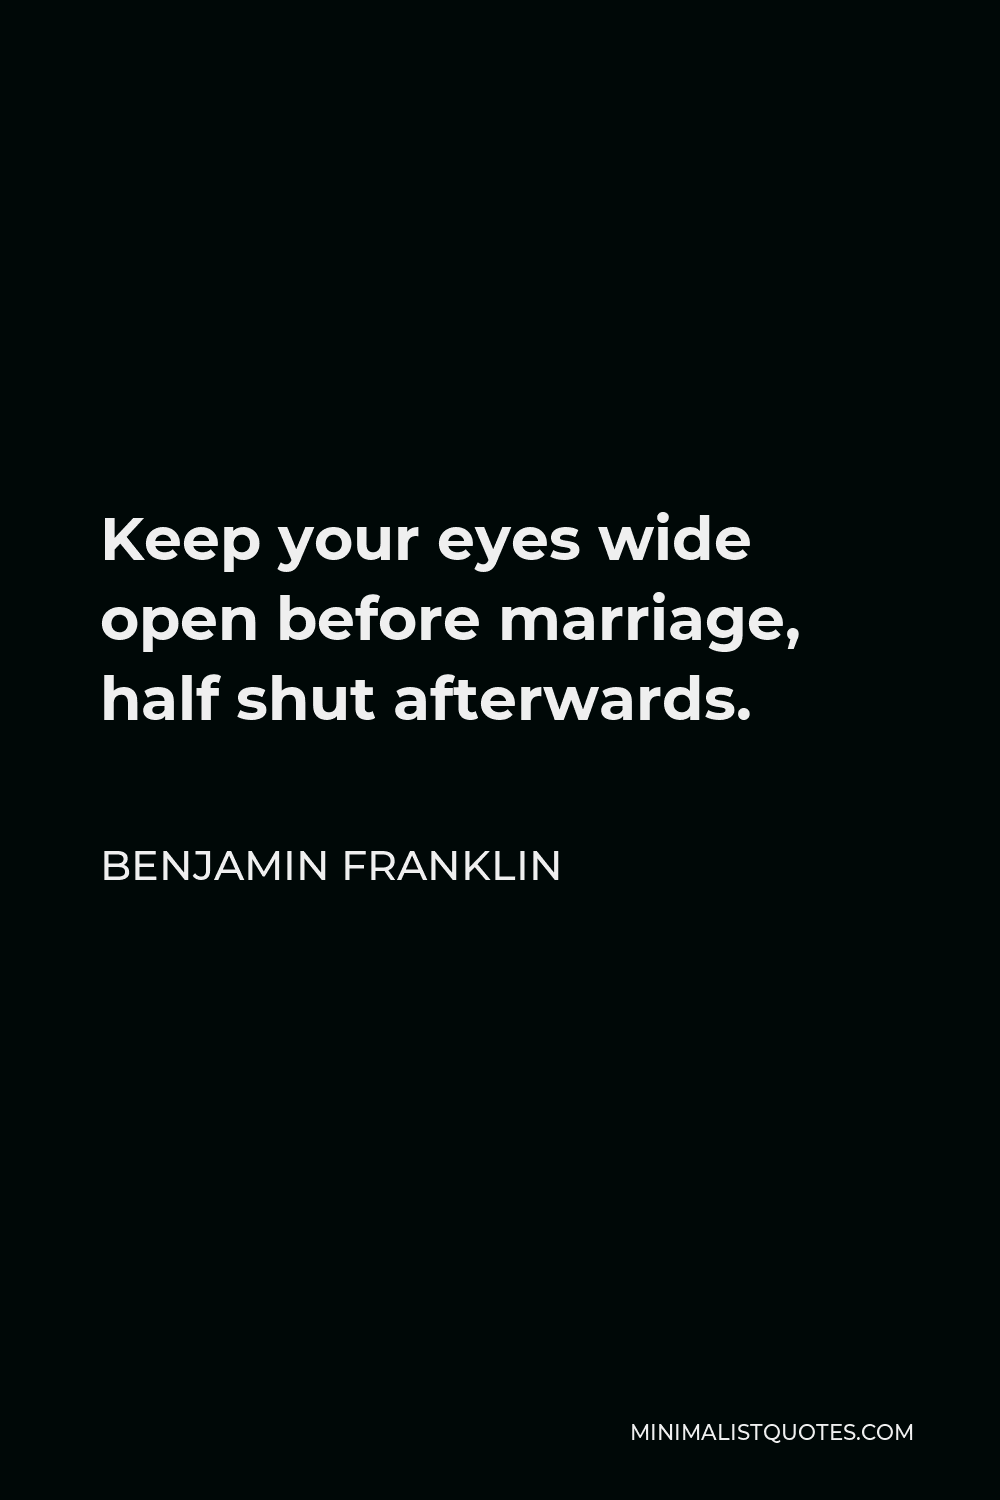 Benjamin Franklin Quote - Keep your eyes wide open before marriage, half shut afterwards.